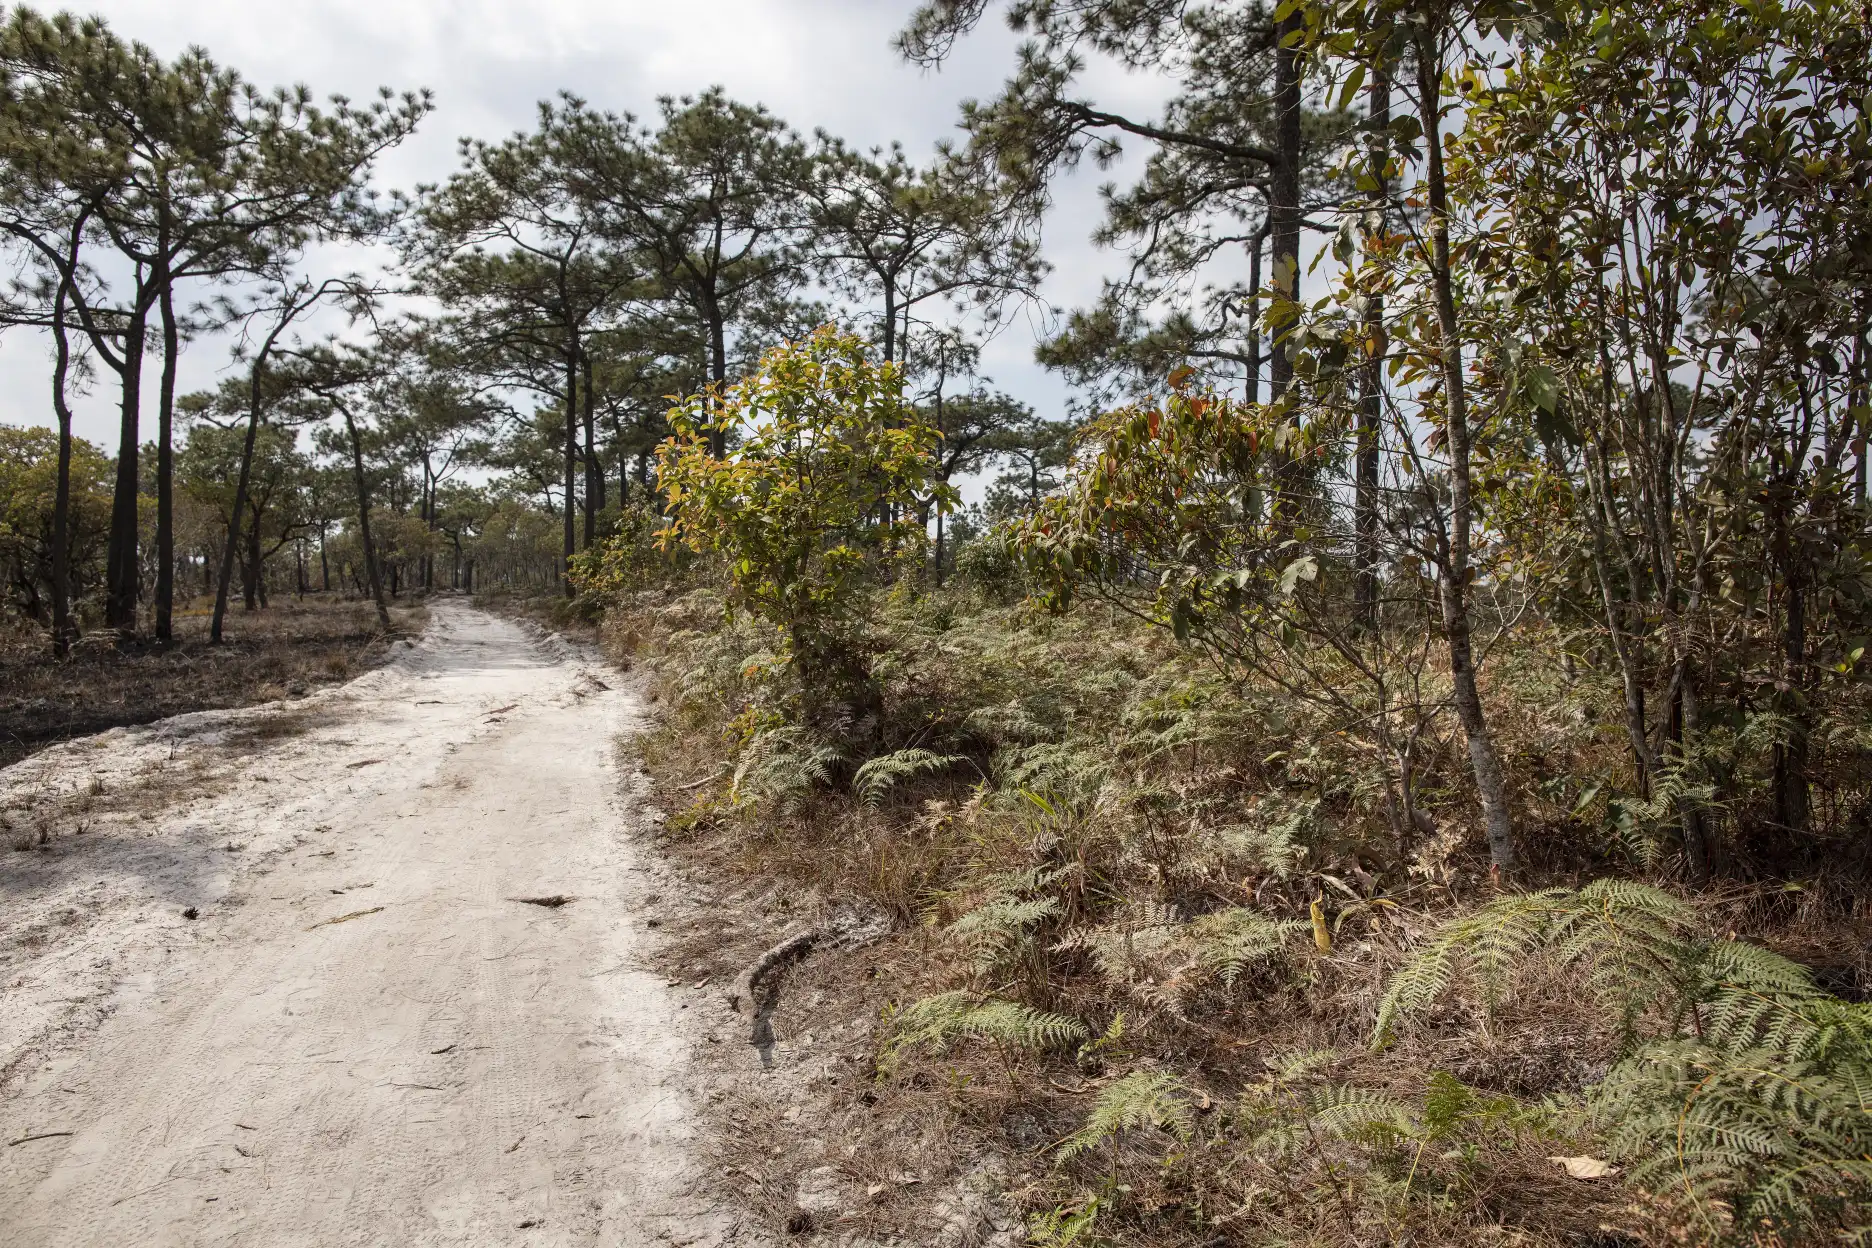 Nepenthes smilesii habitat along trail to Lom Sak Cliff